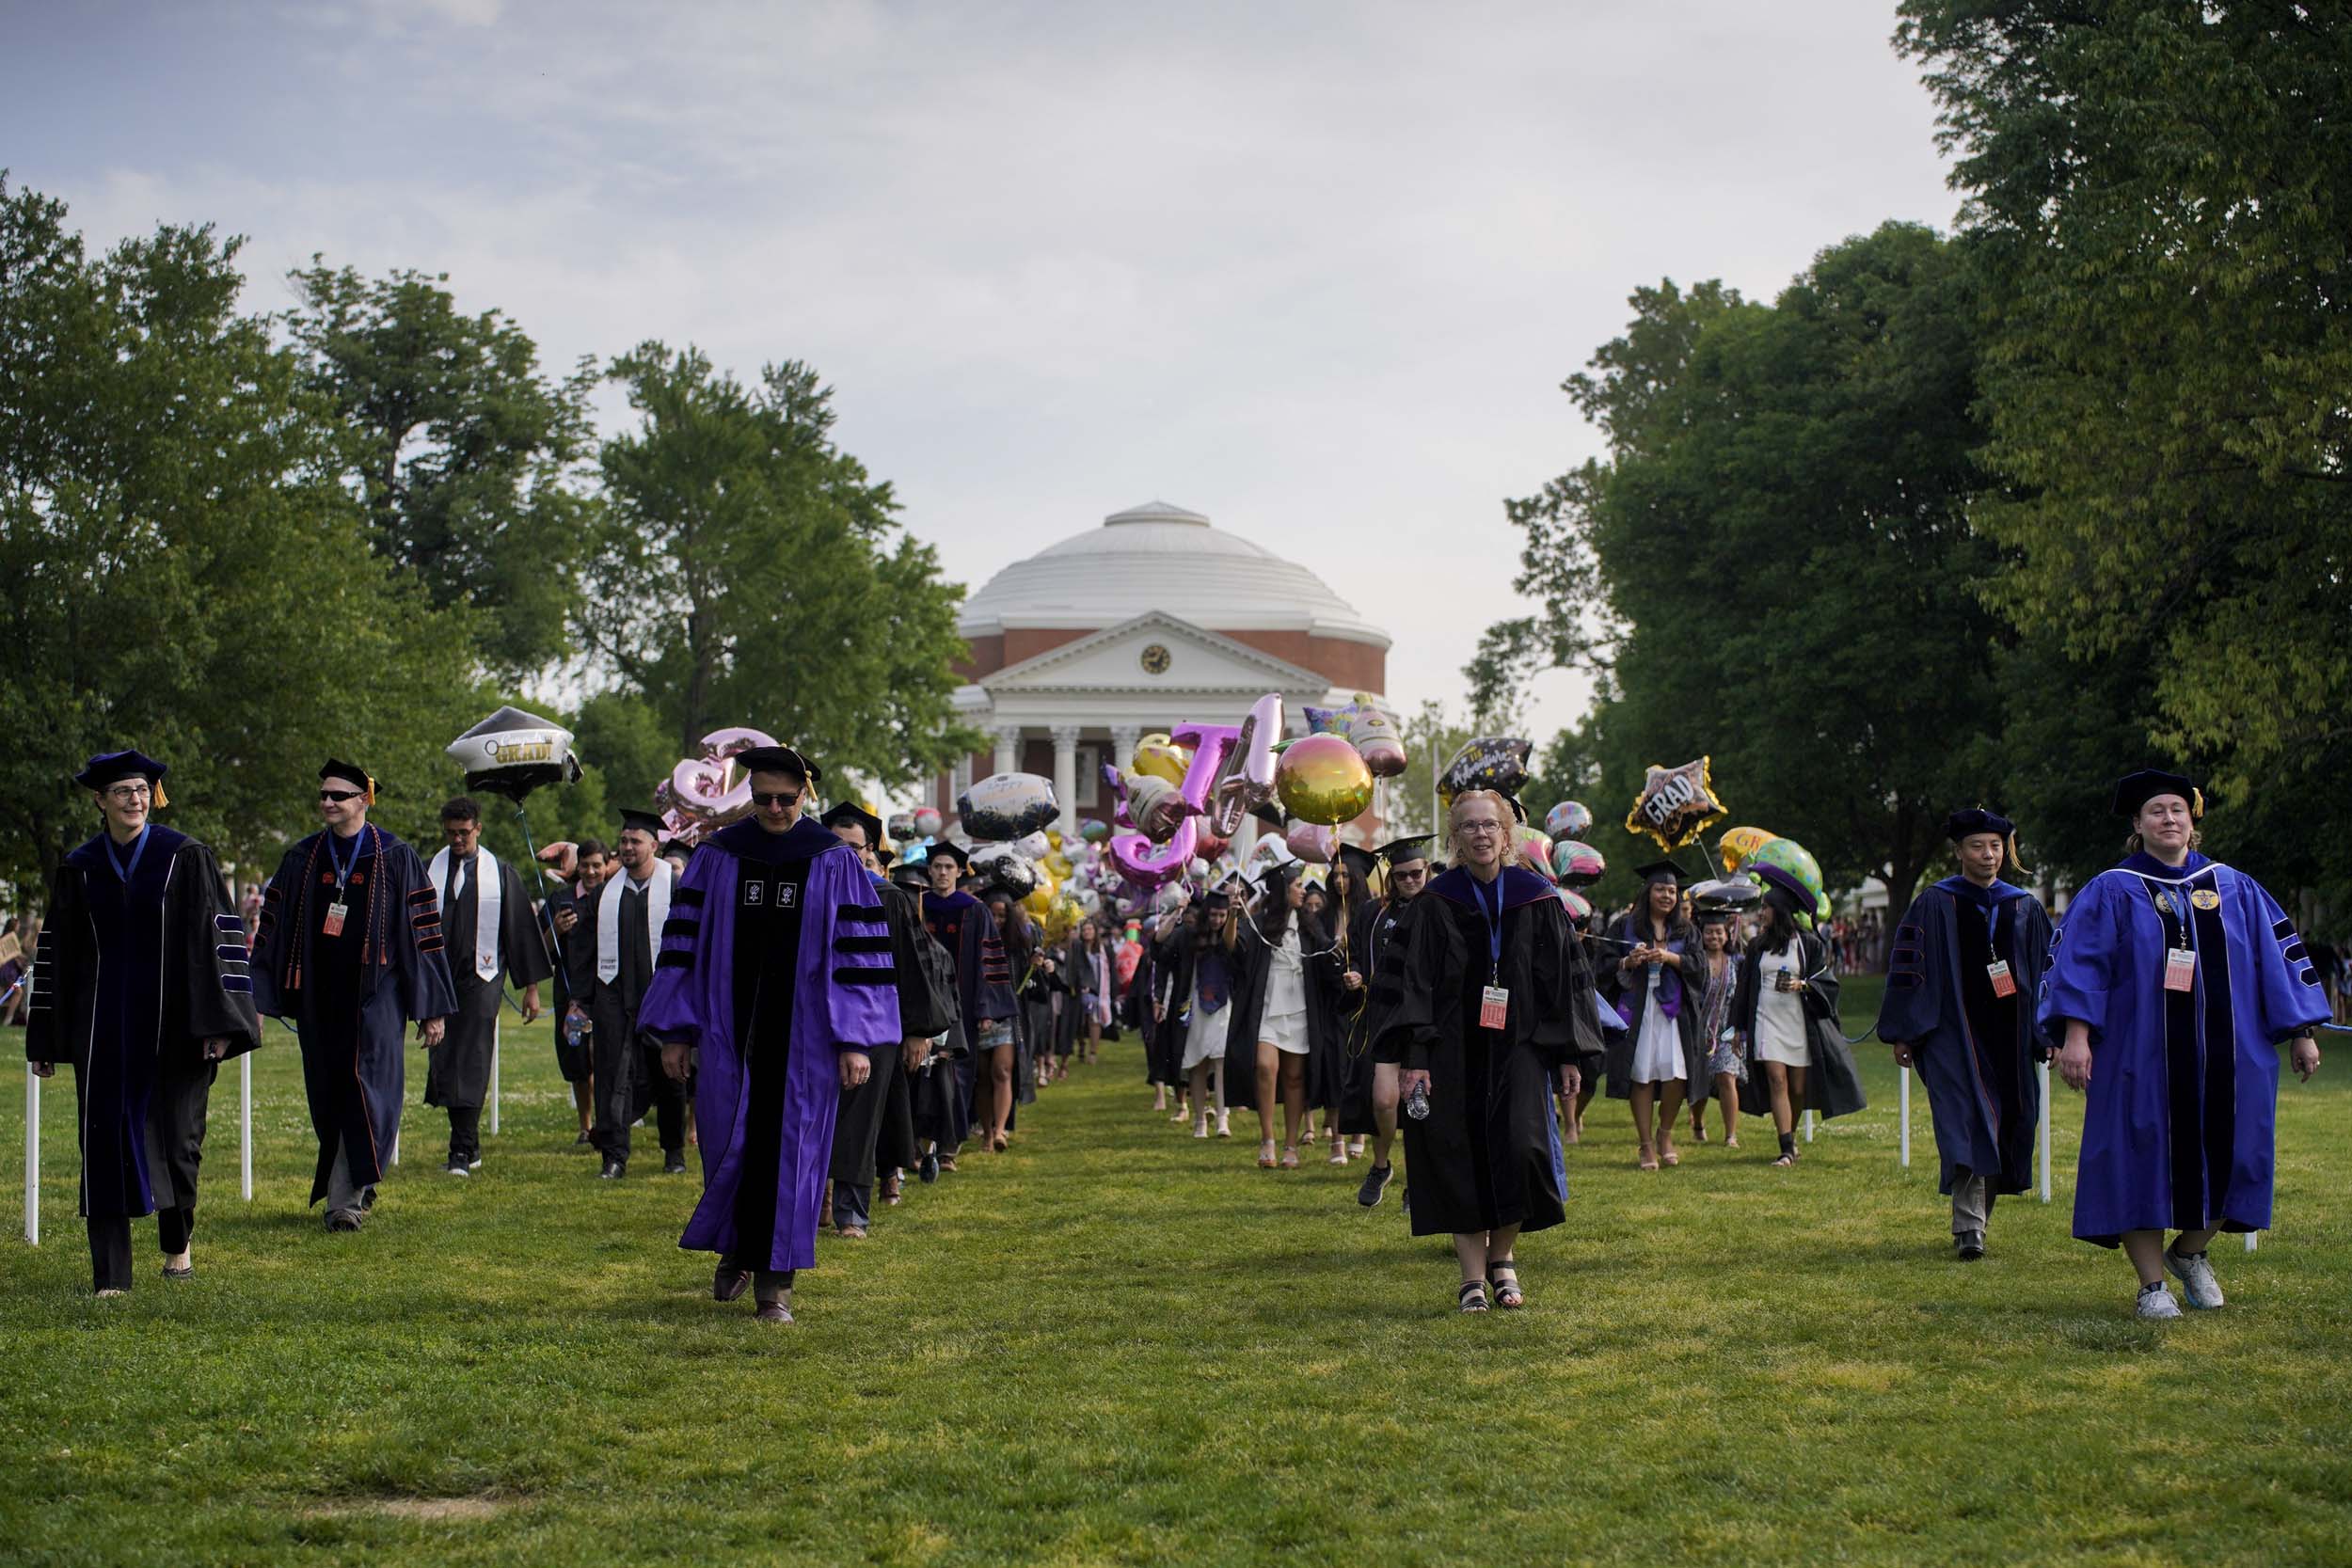 Graduates walking across the lawn from the Rotunda